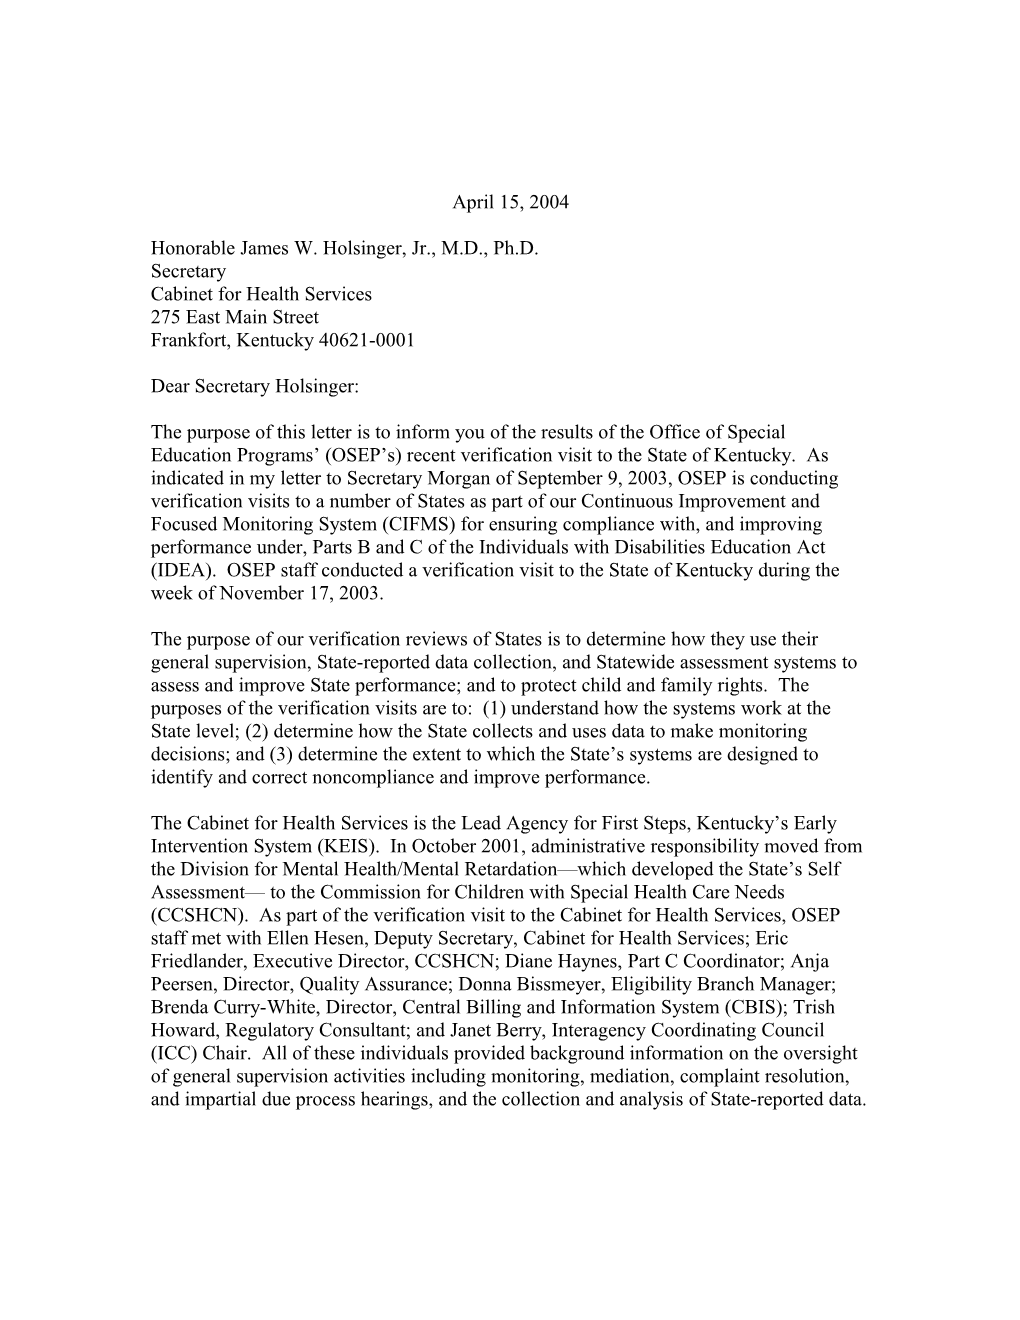 Kentucky Part C Verification Visit Letter, Dated April 15, 2004 (MS Word)